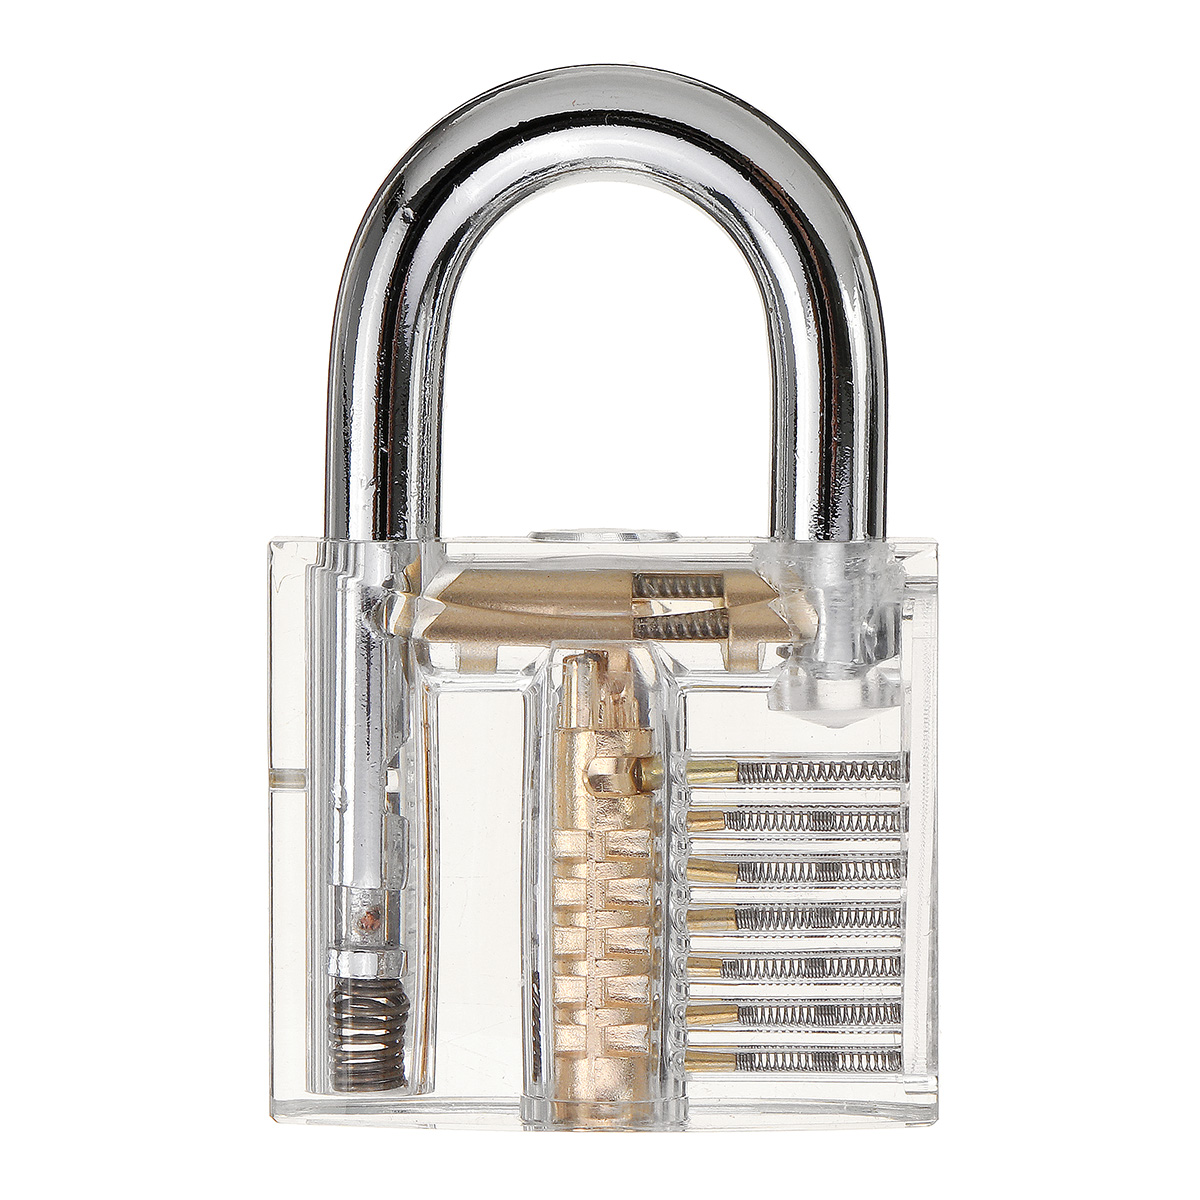 Unlocking-Locksmith-Practice-Lock-Picks-Key-Extractor-Padlock-Lockpick-Tool-Kits-1667833-11